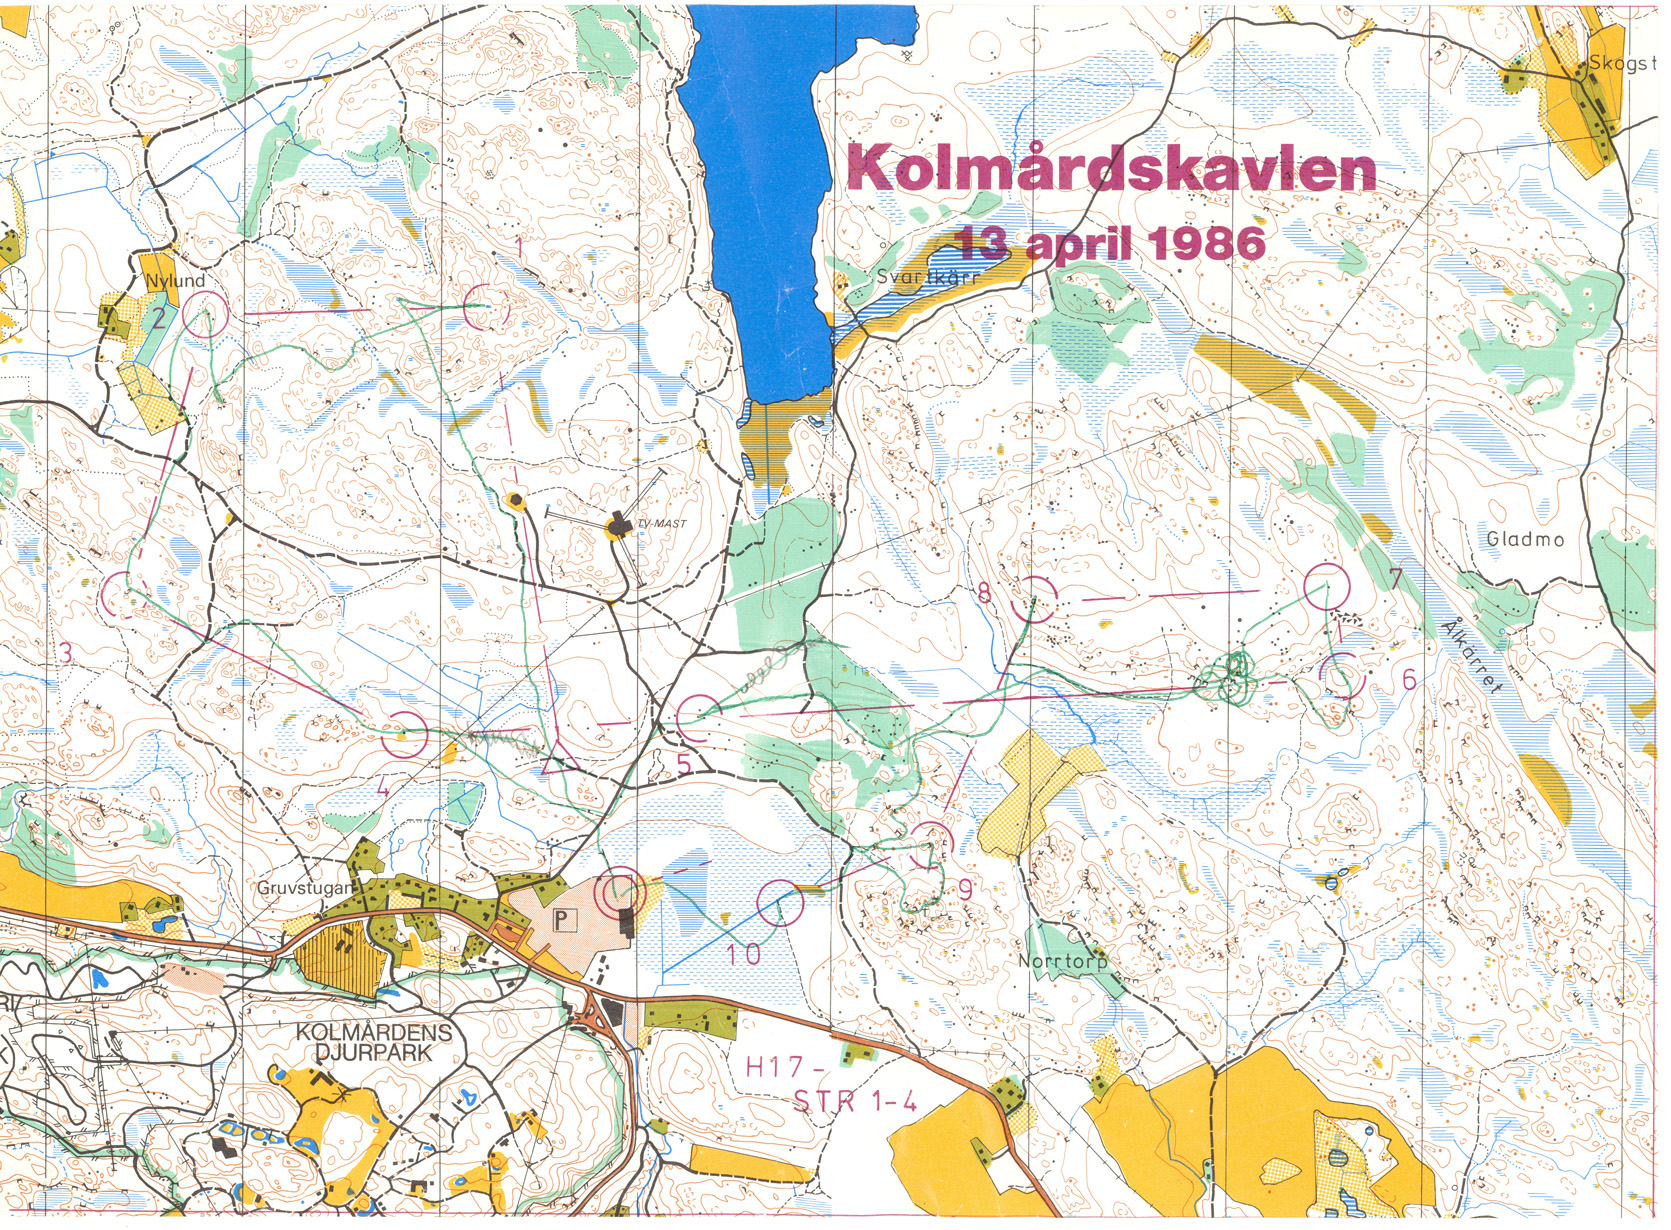 Kolmårdskavlen (13-04-1986)